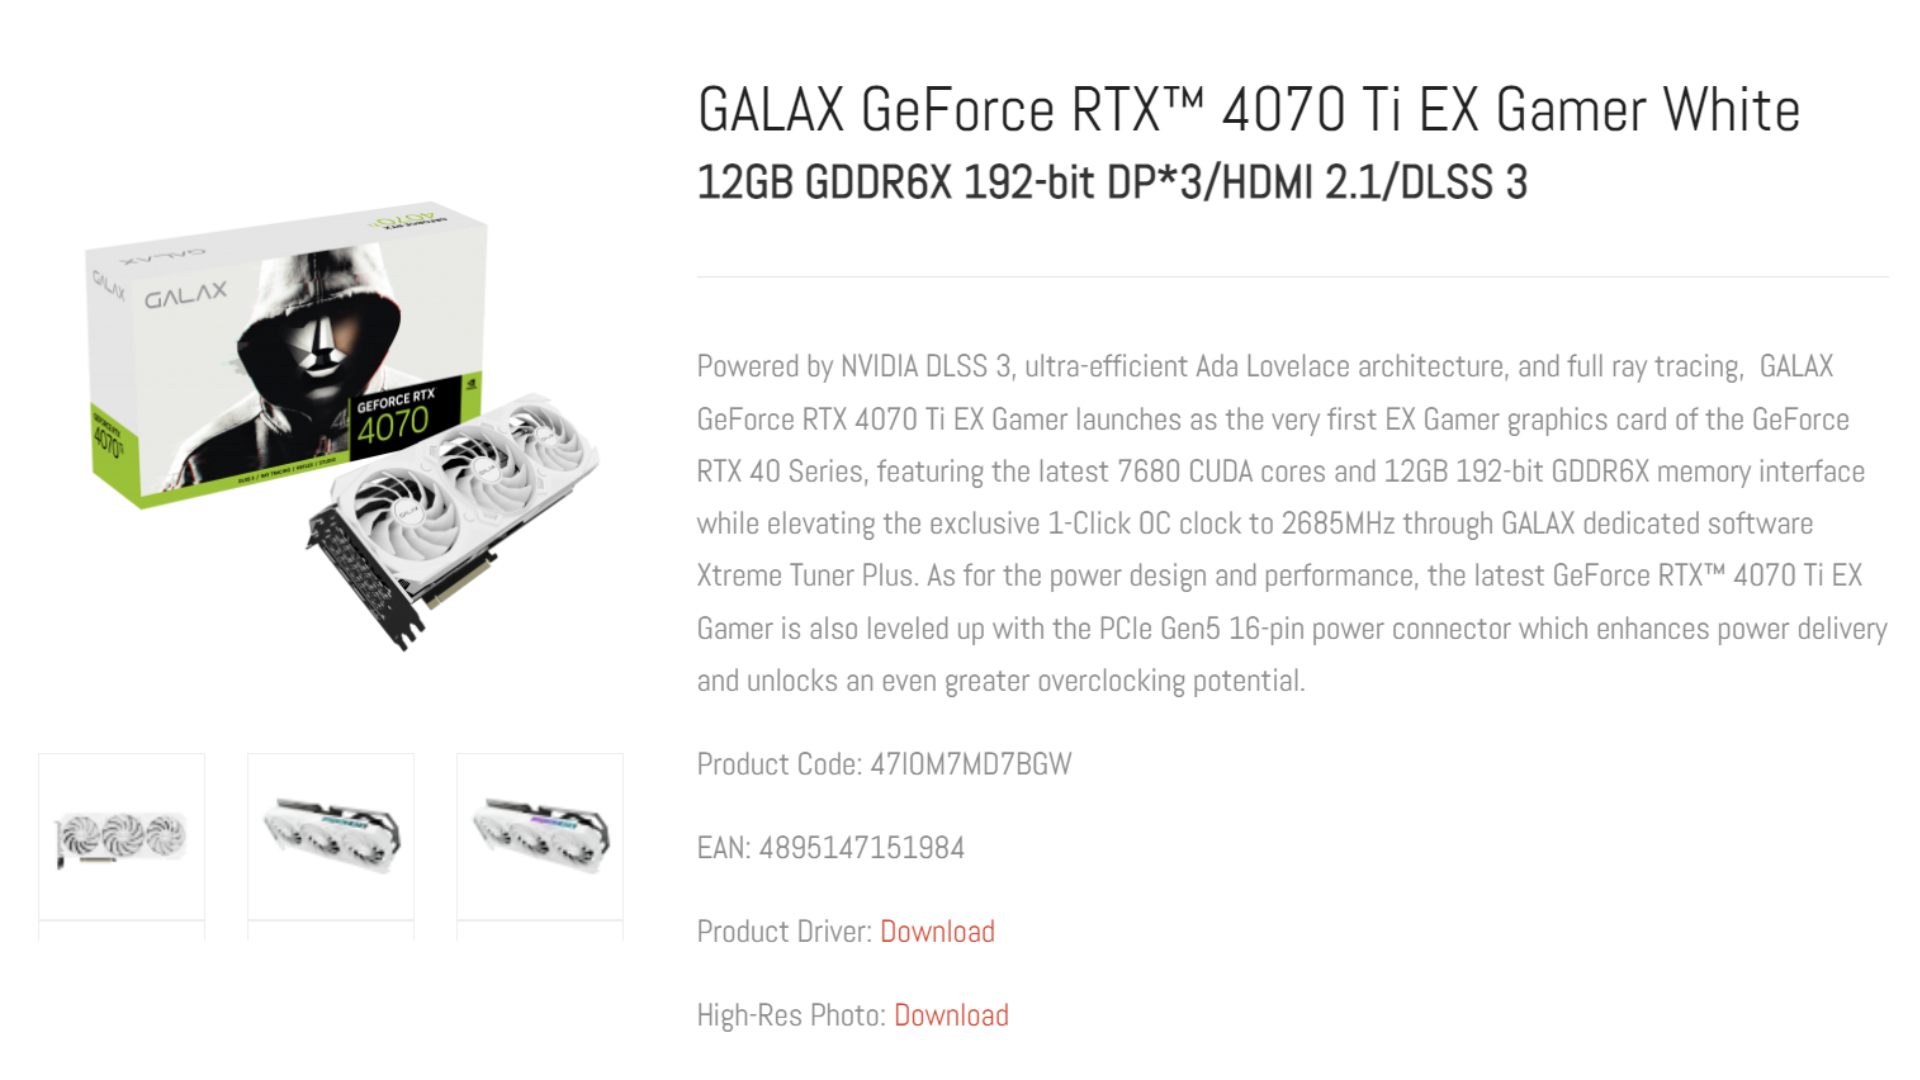 Galax RTX 4070 box with white GPU on right and description 